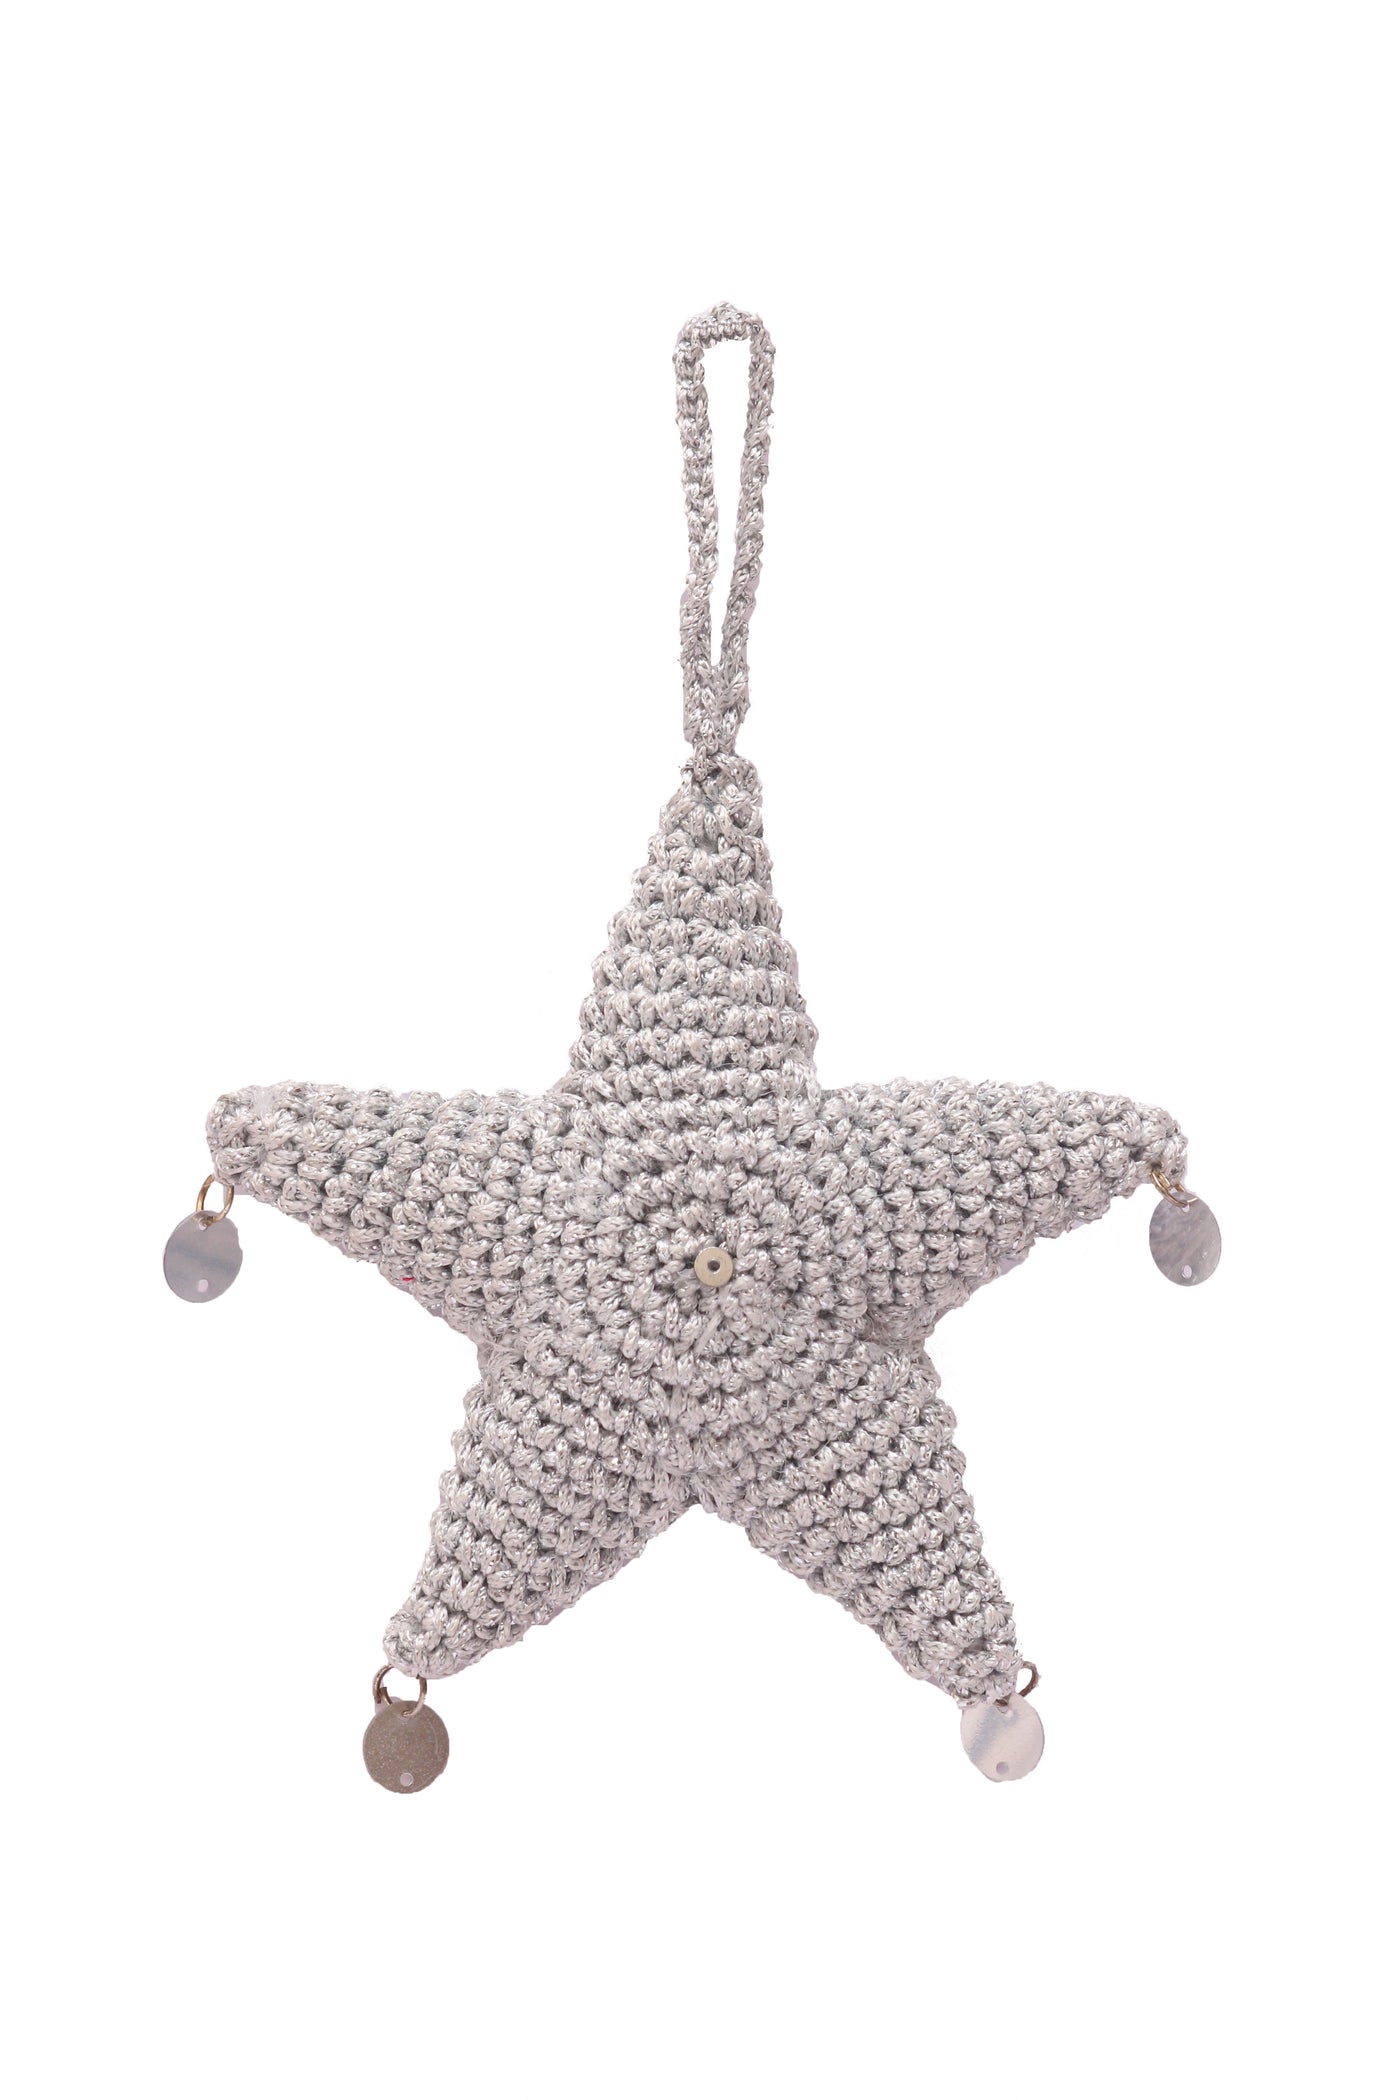 Handcrafted Amigurumi Christmas Tree Ornament-
star crochet- Silver